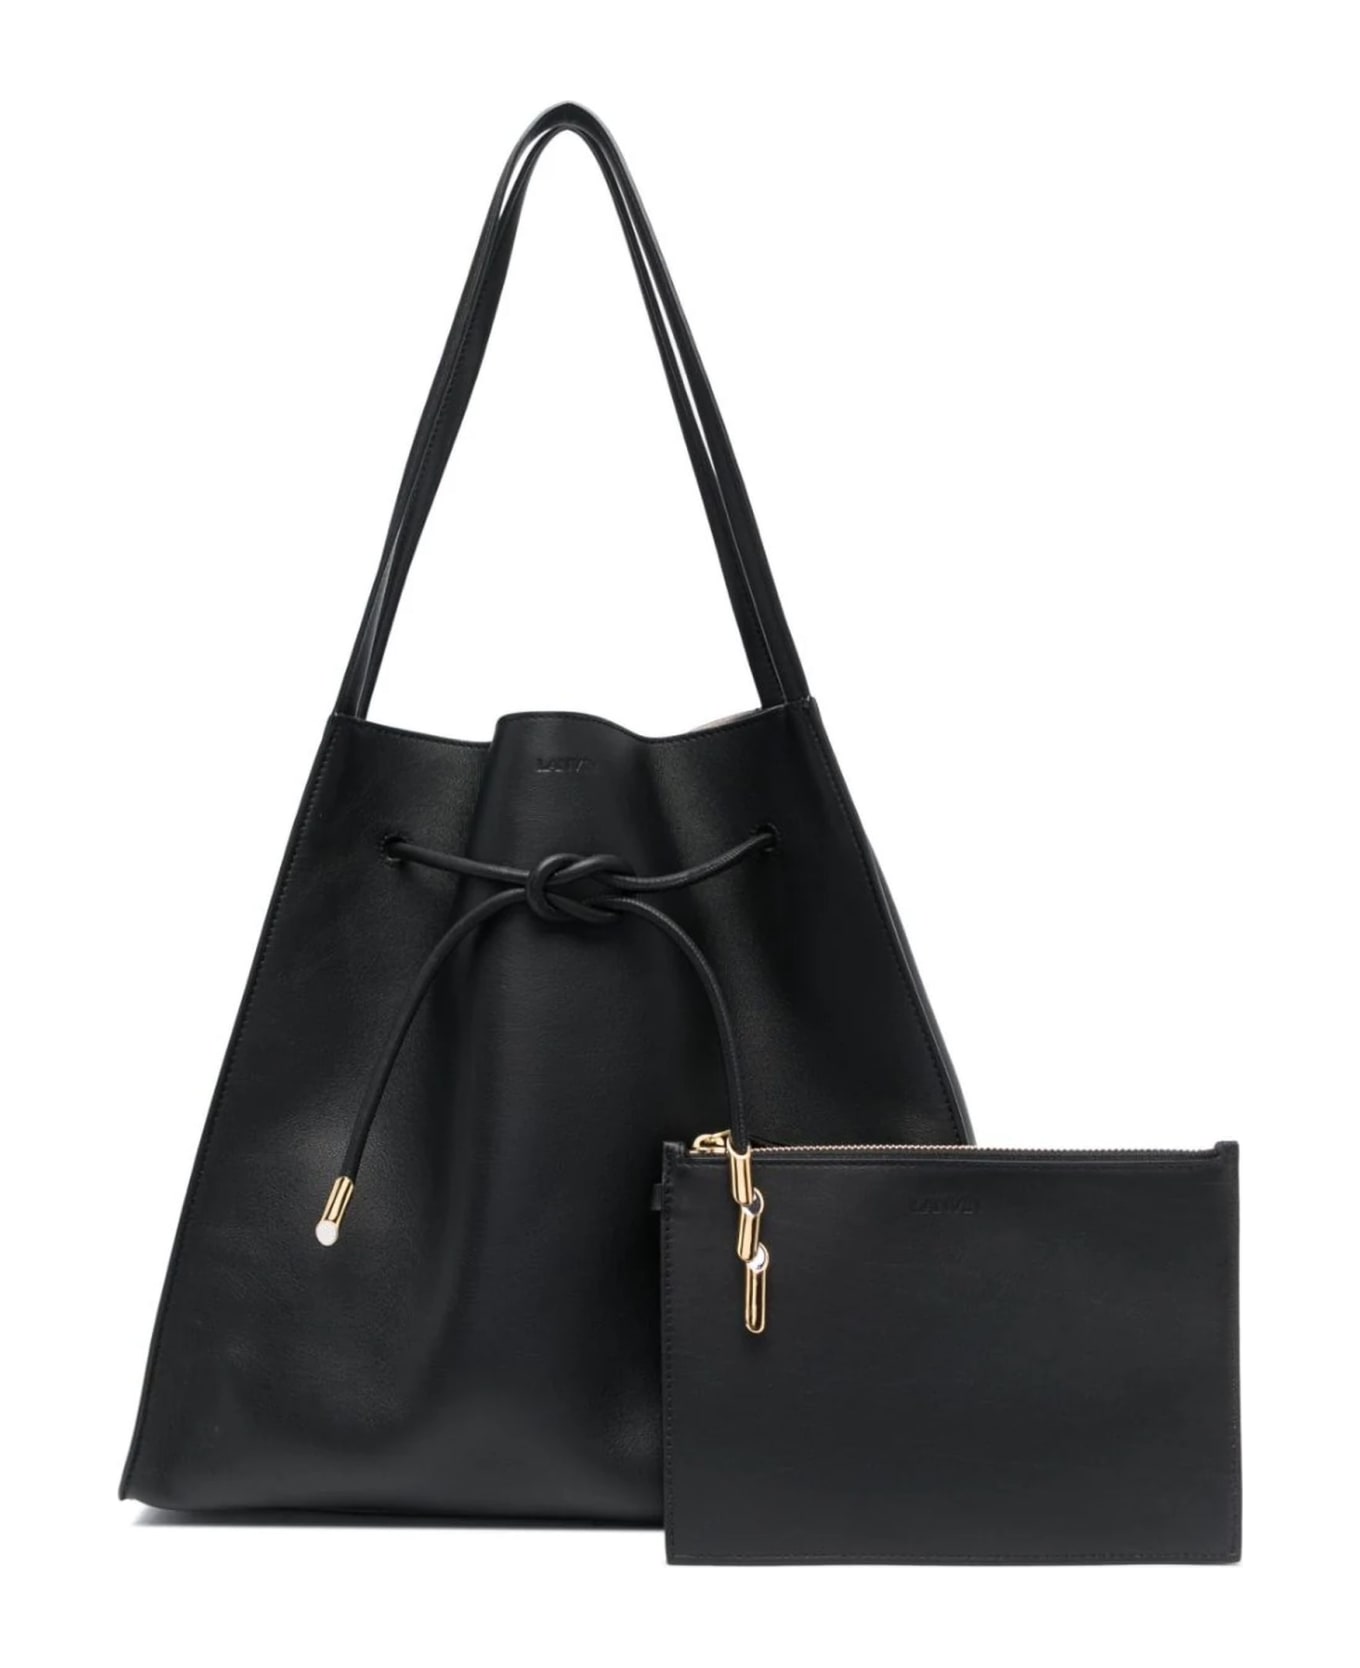 Lanvin Medium Sequence Leather Tote Bag - Black